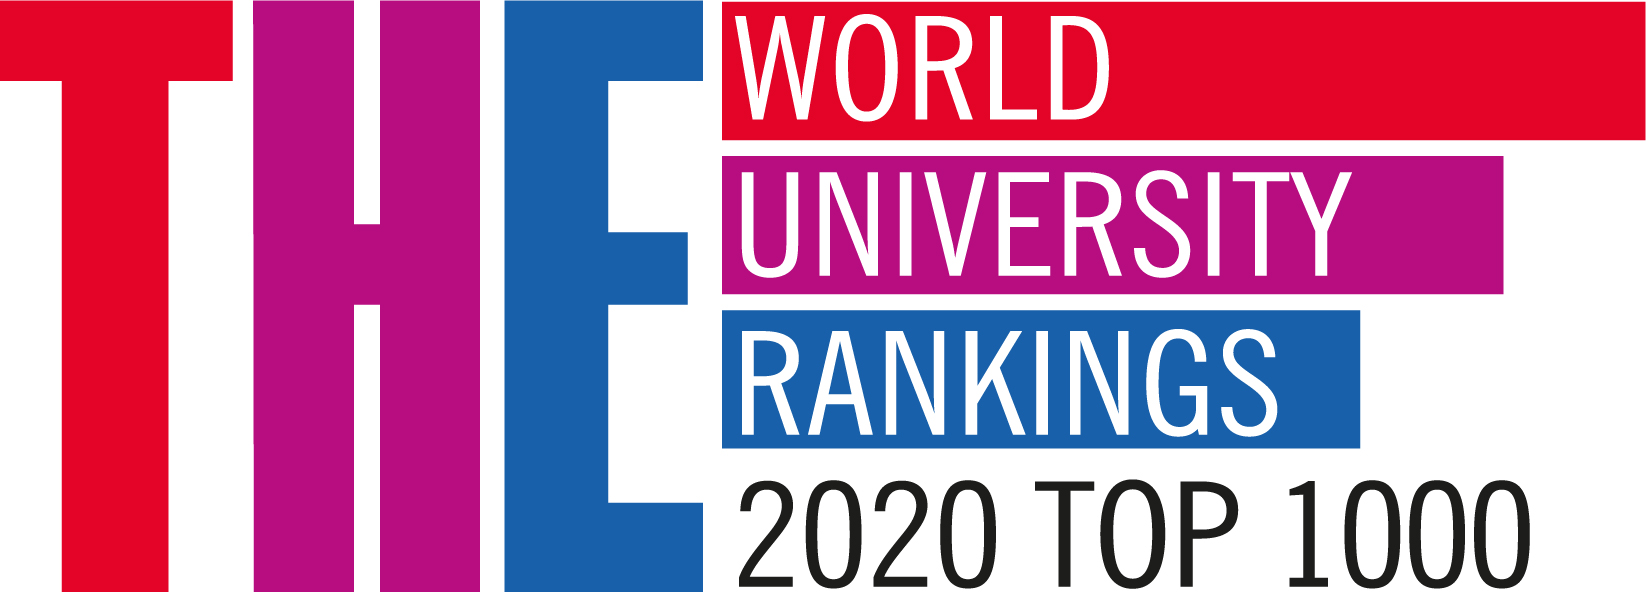 World University Rankings 2020 Top 1000.jpg